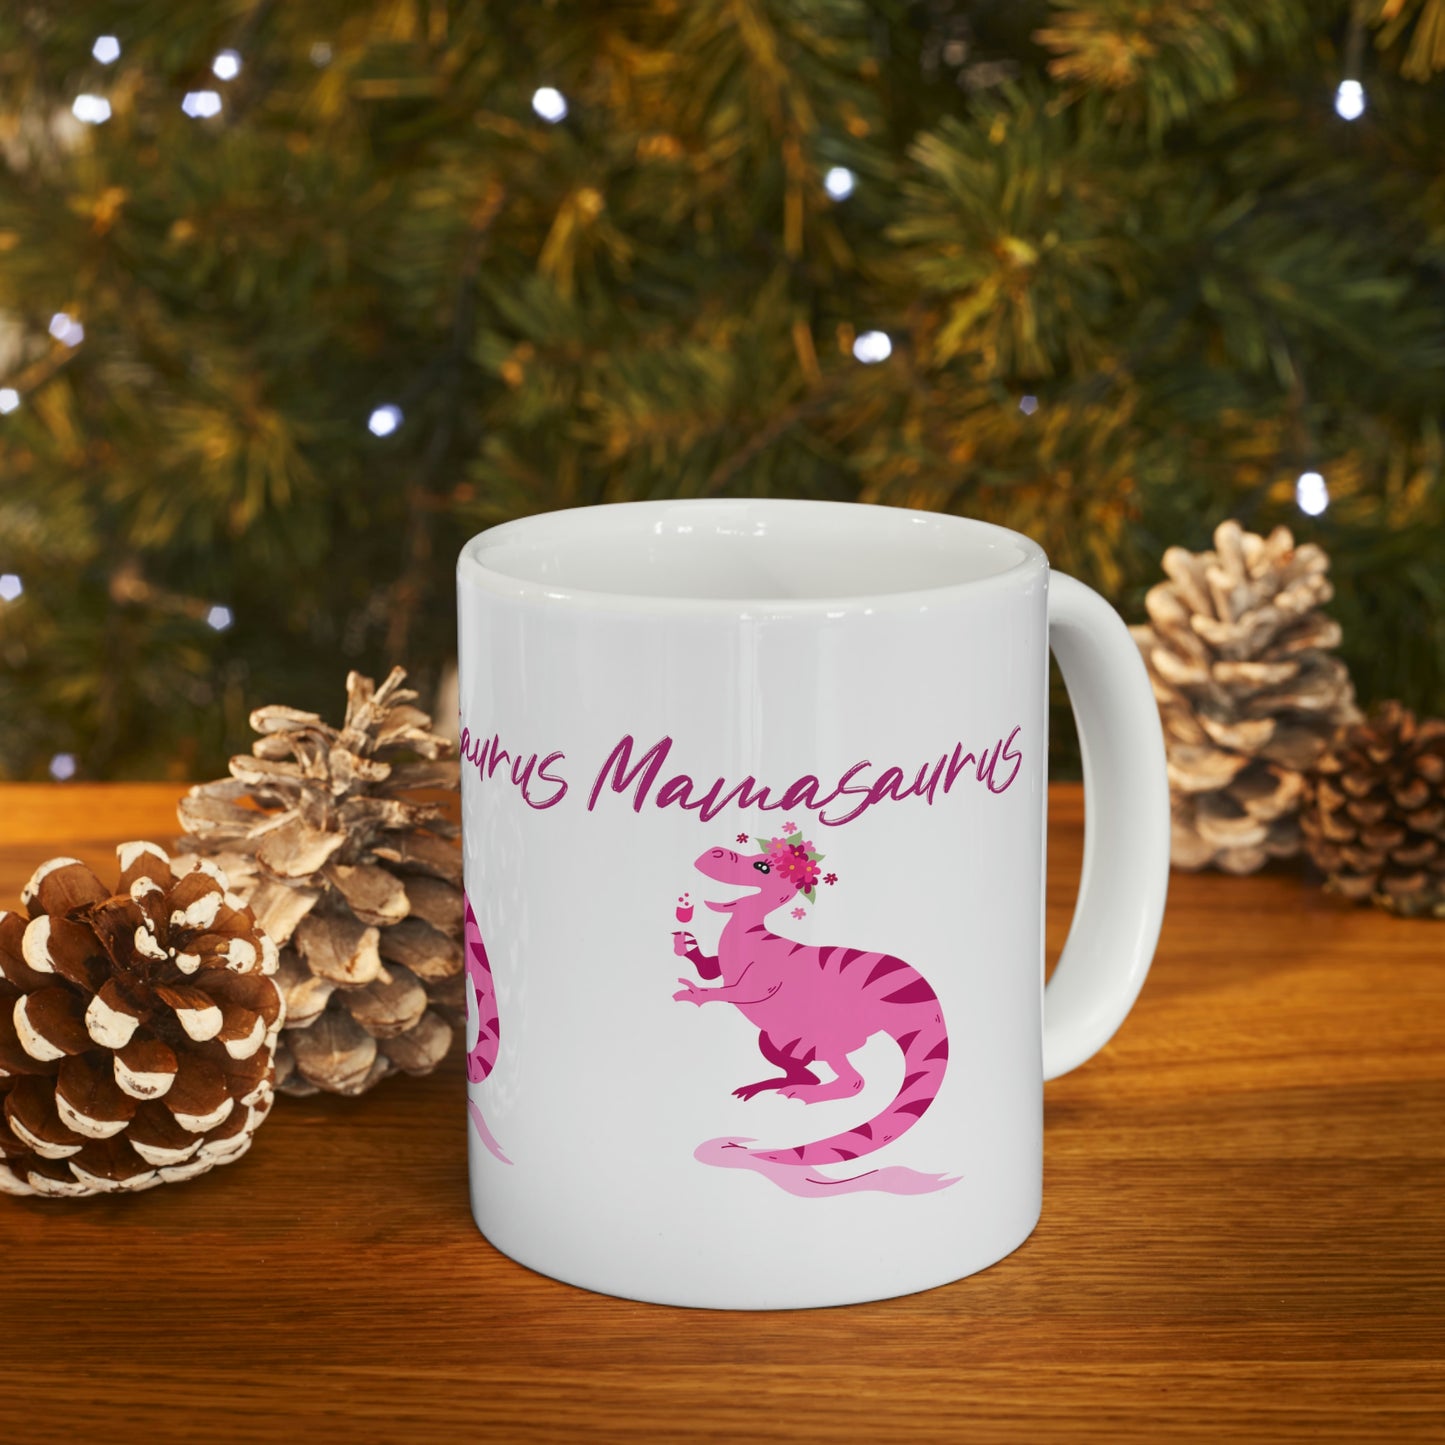 Mamasaurus Ceramic Mug: White; 11 oz.; Cute graphics